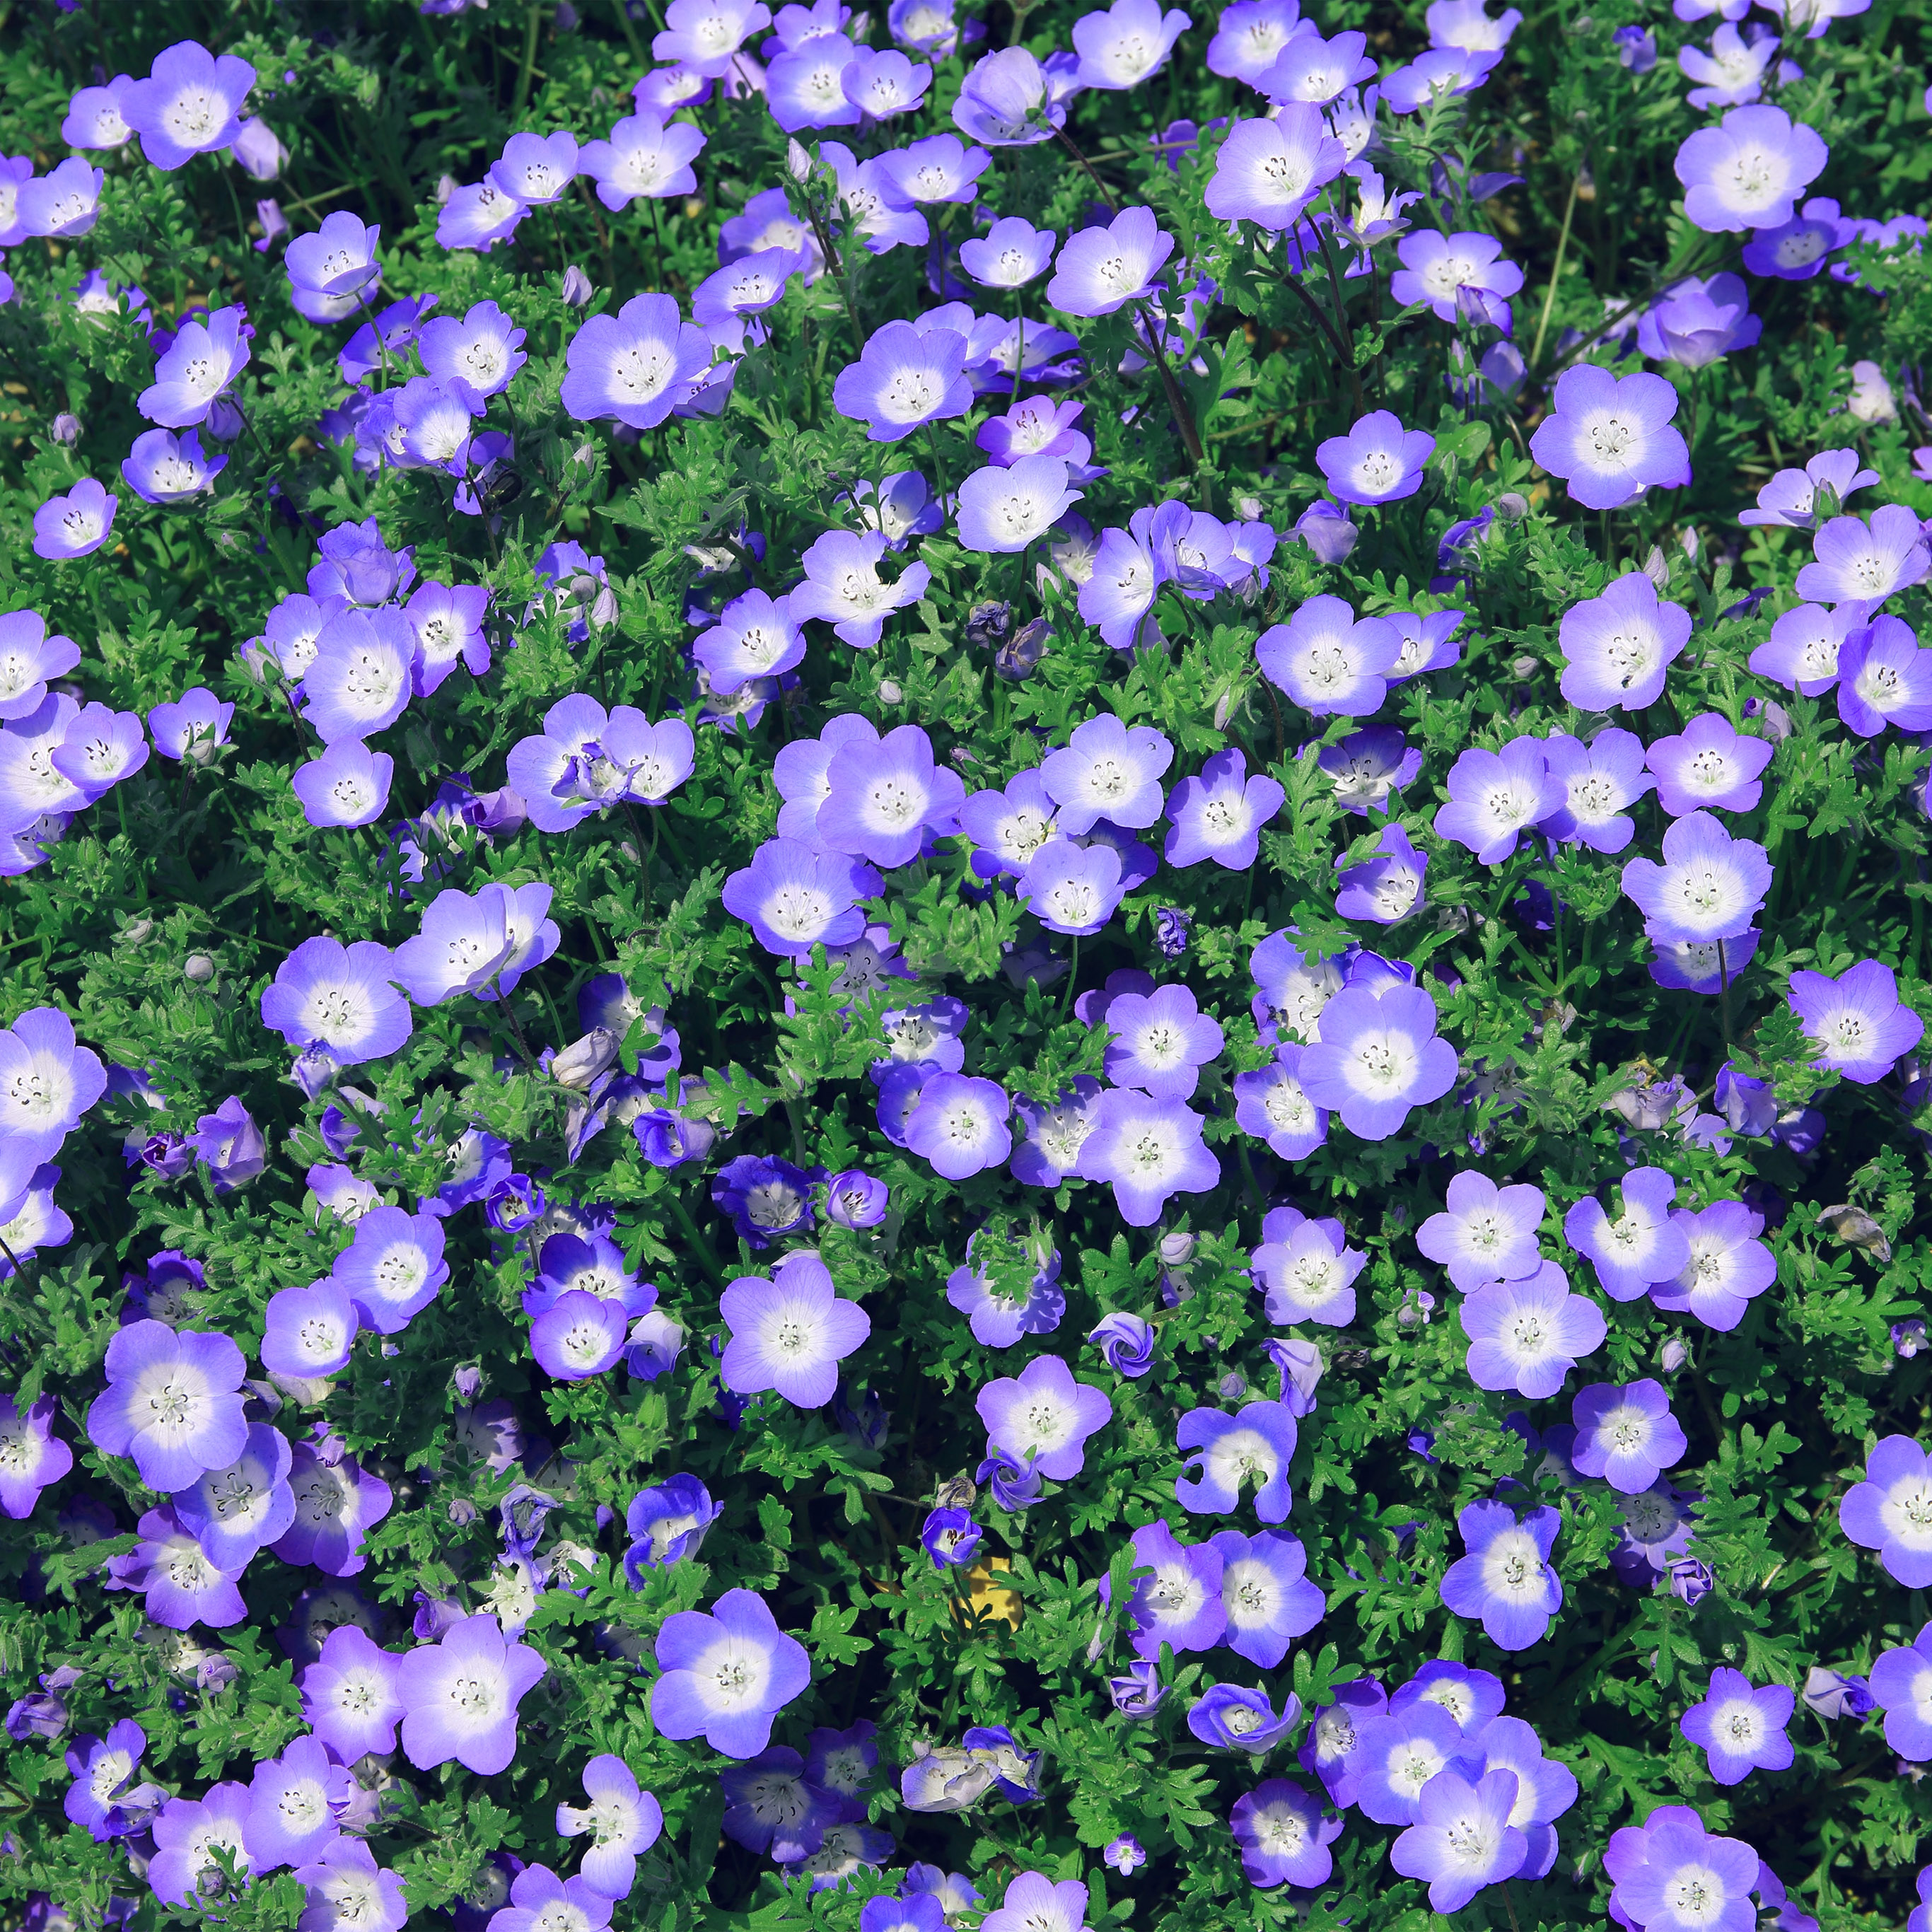 Flower Spring Purple Nature Wallpaper